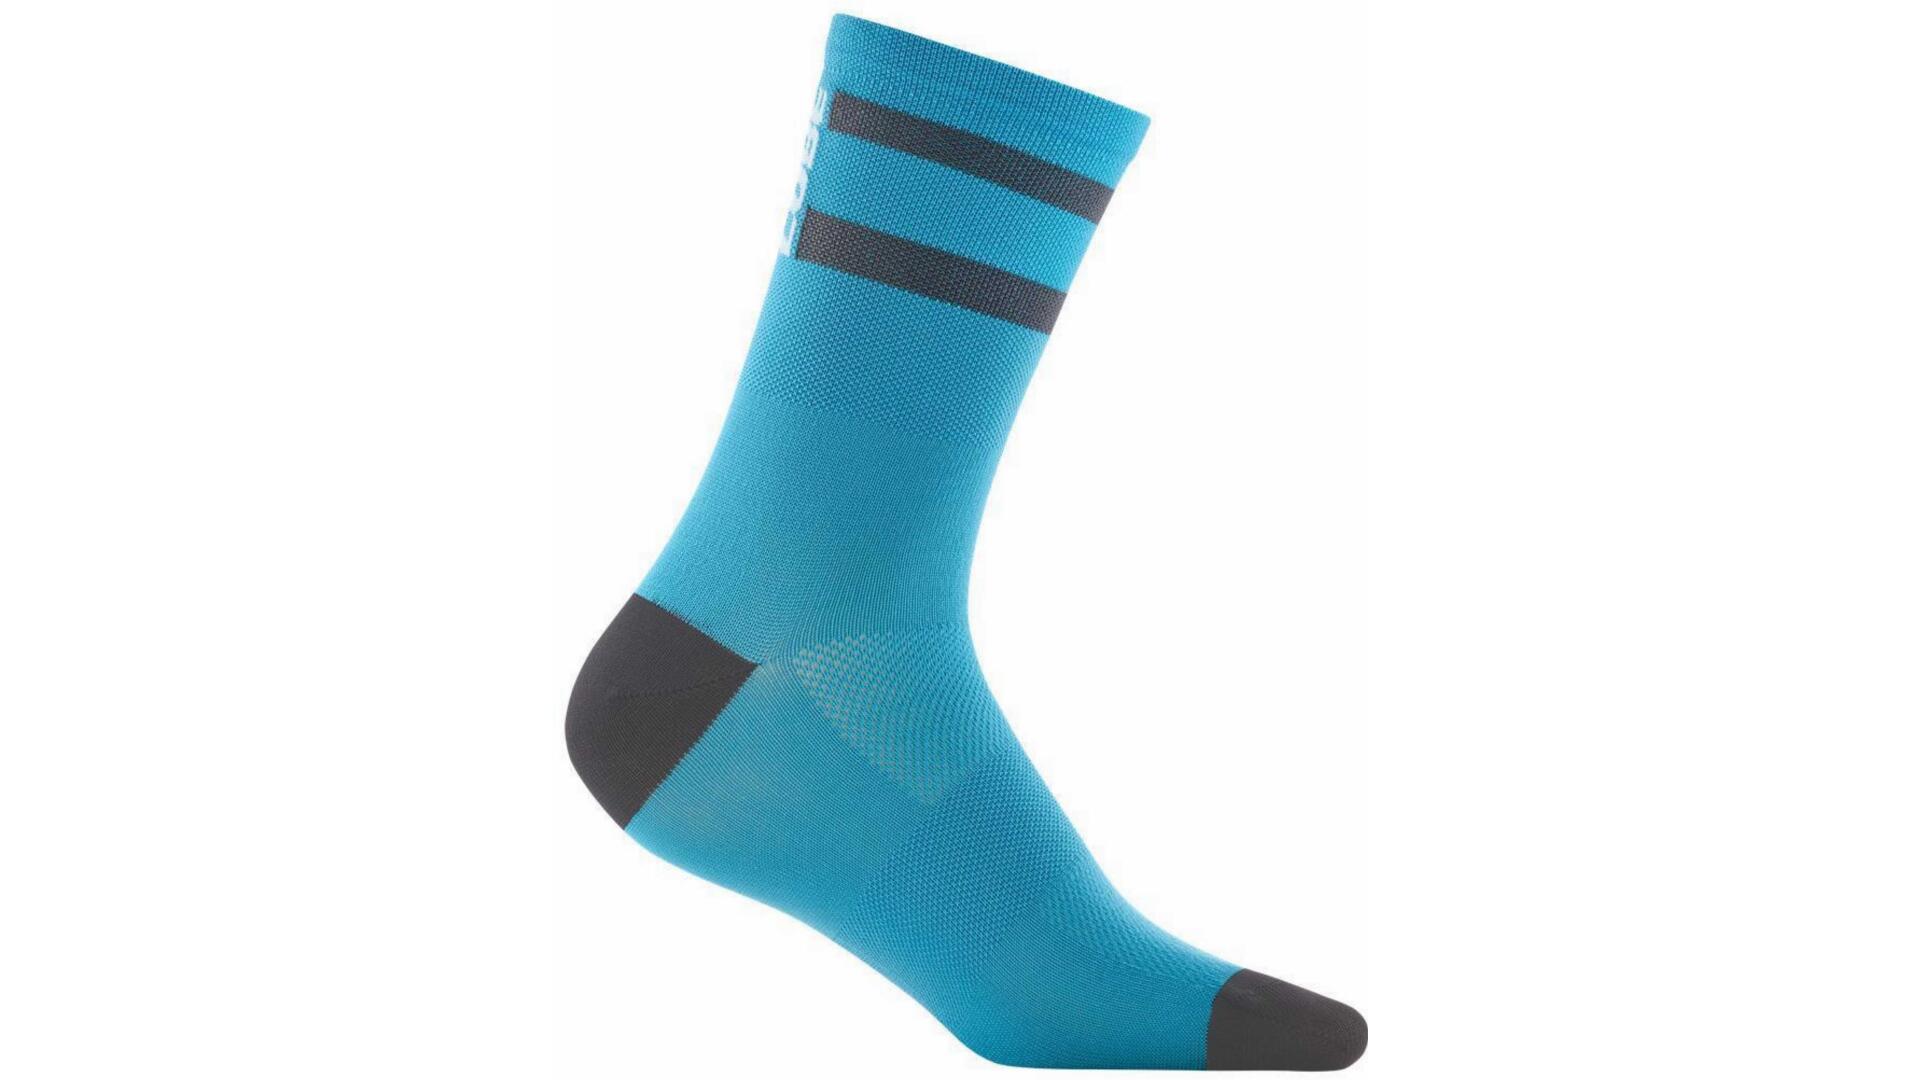 CUBE Socke High Cut Cross blue 44-47